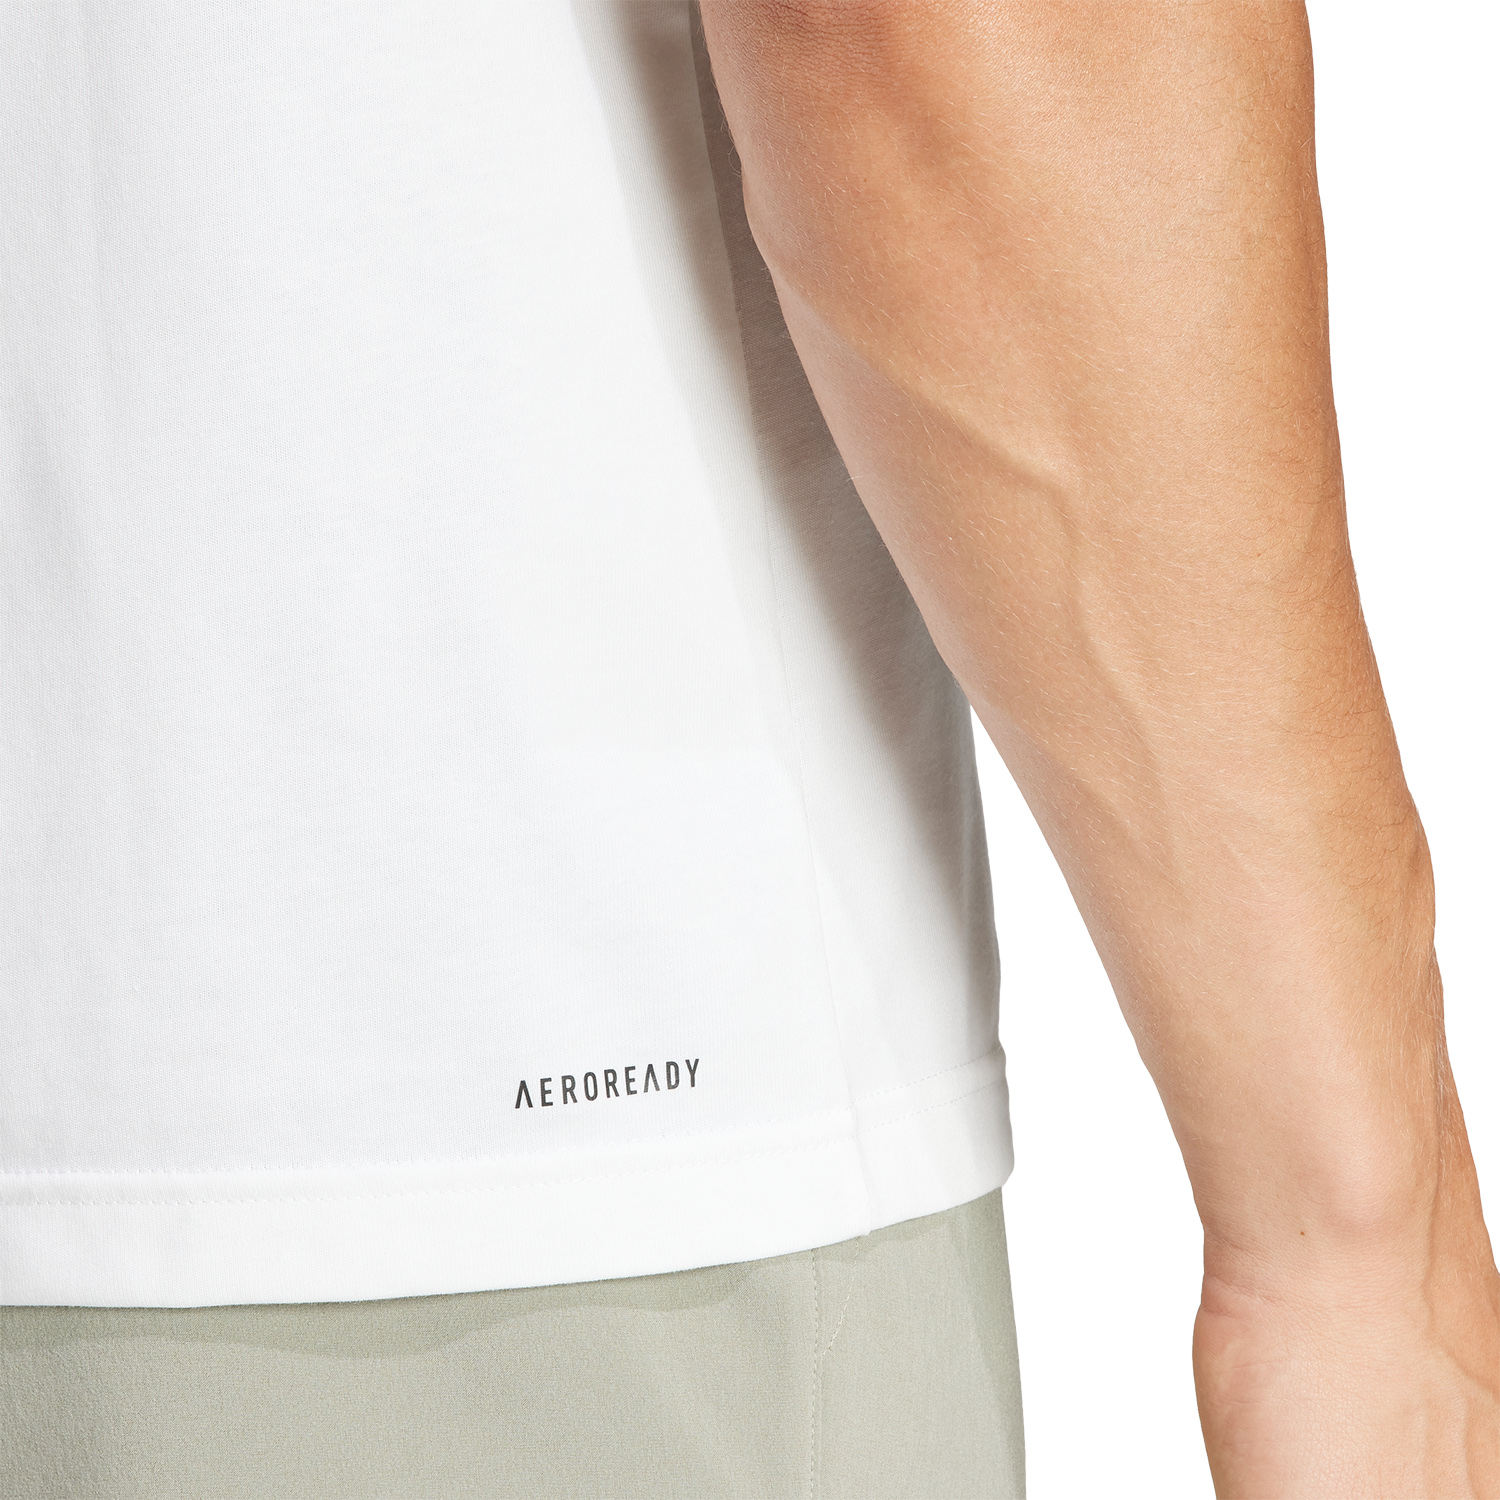 adidas AO Graphic T-Shirt - White